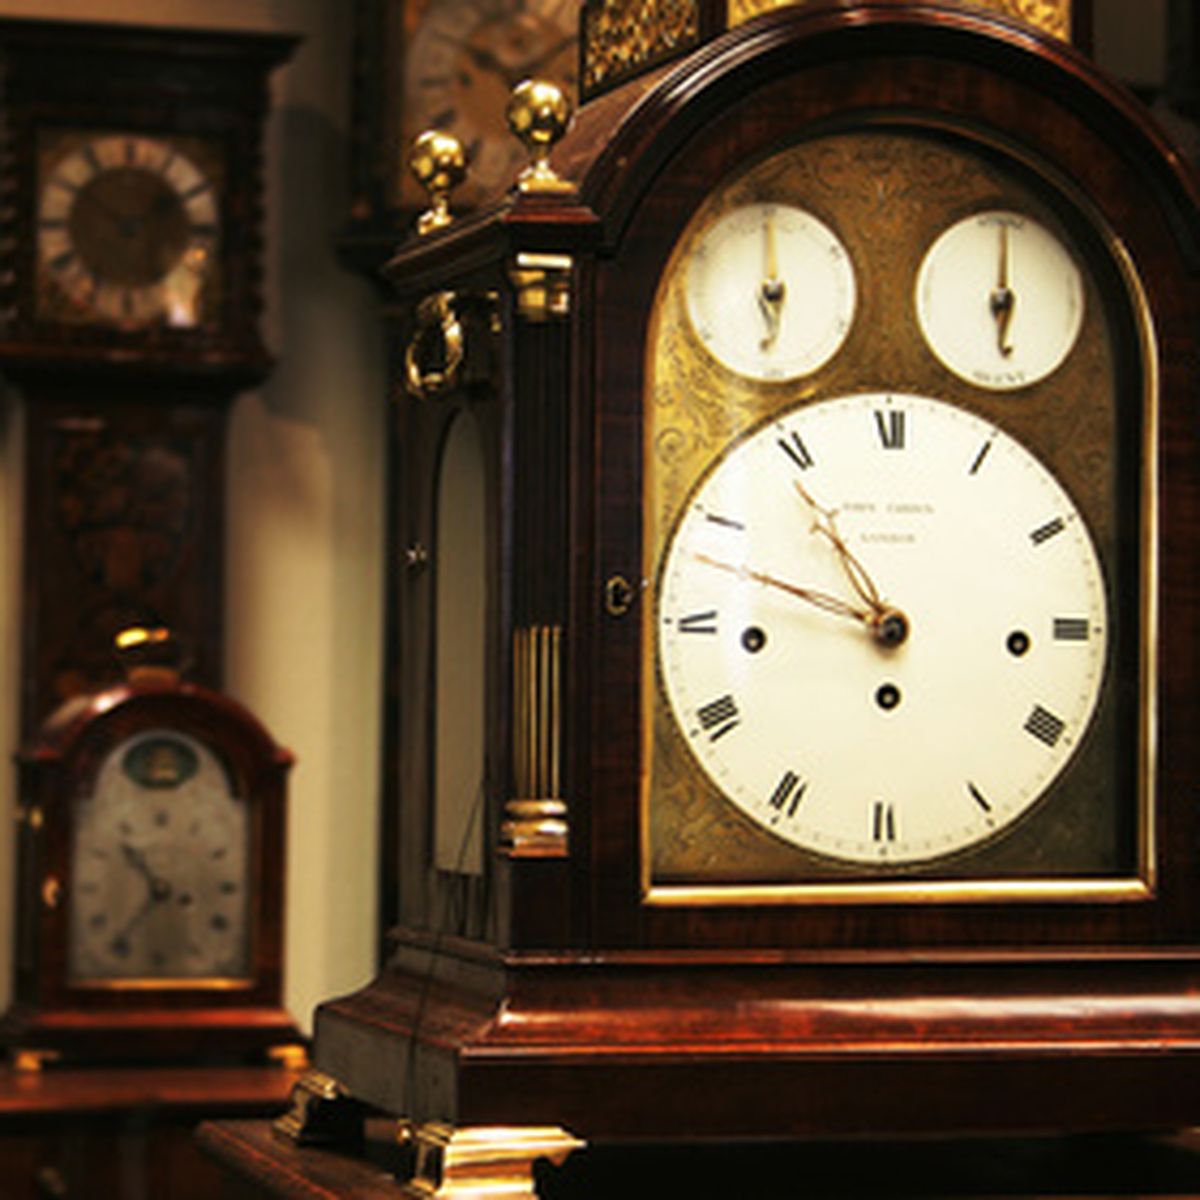 Grandfather Clocks are Timeless Treasures